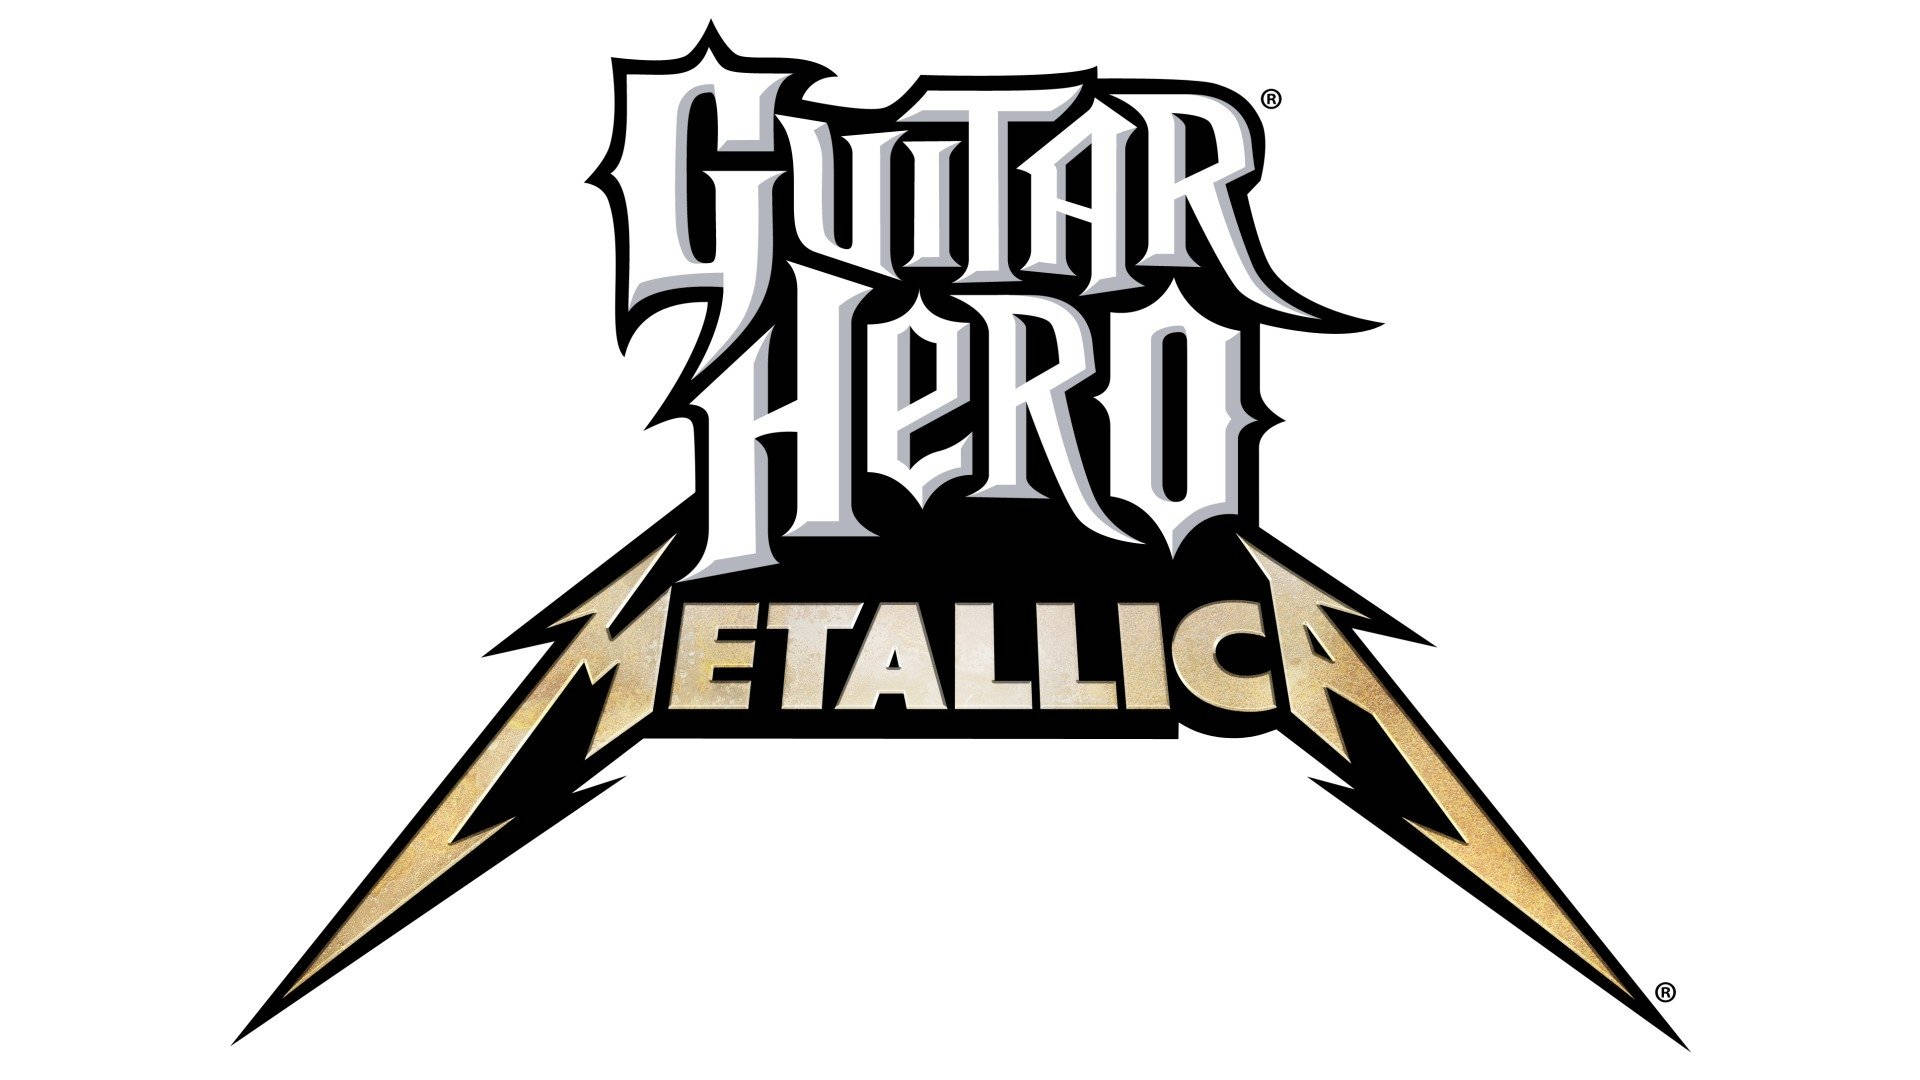 Guitar Hero Metallica In White Background